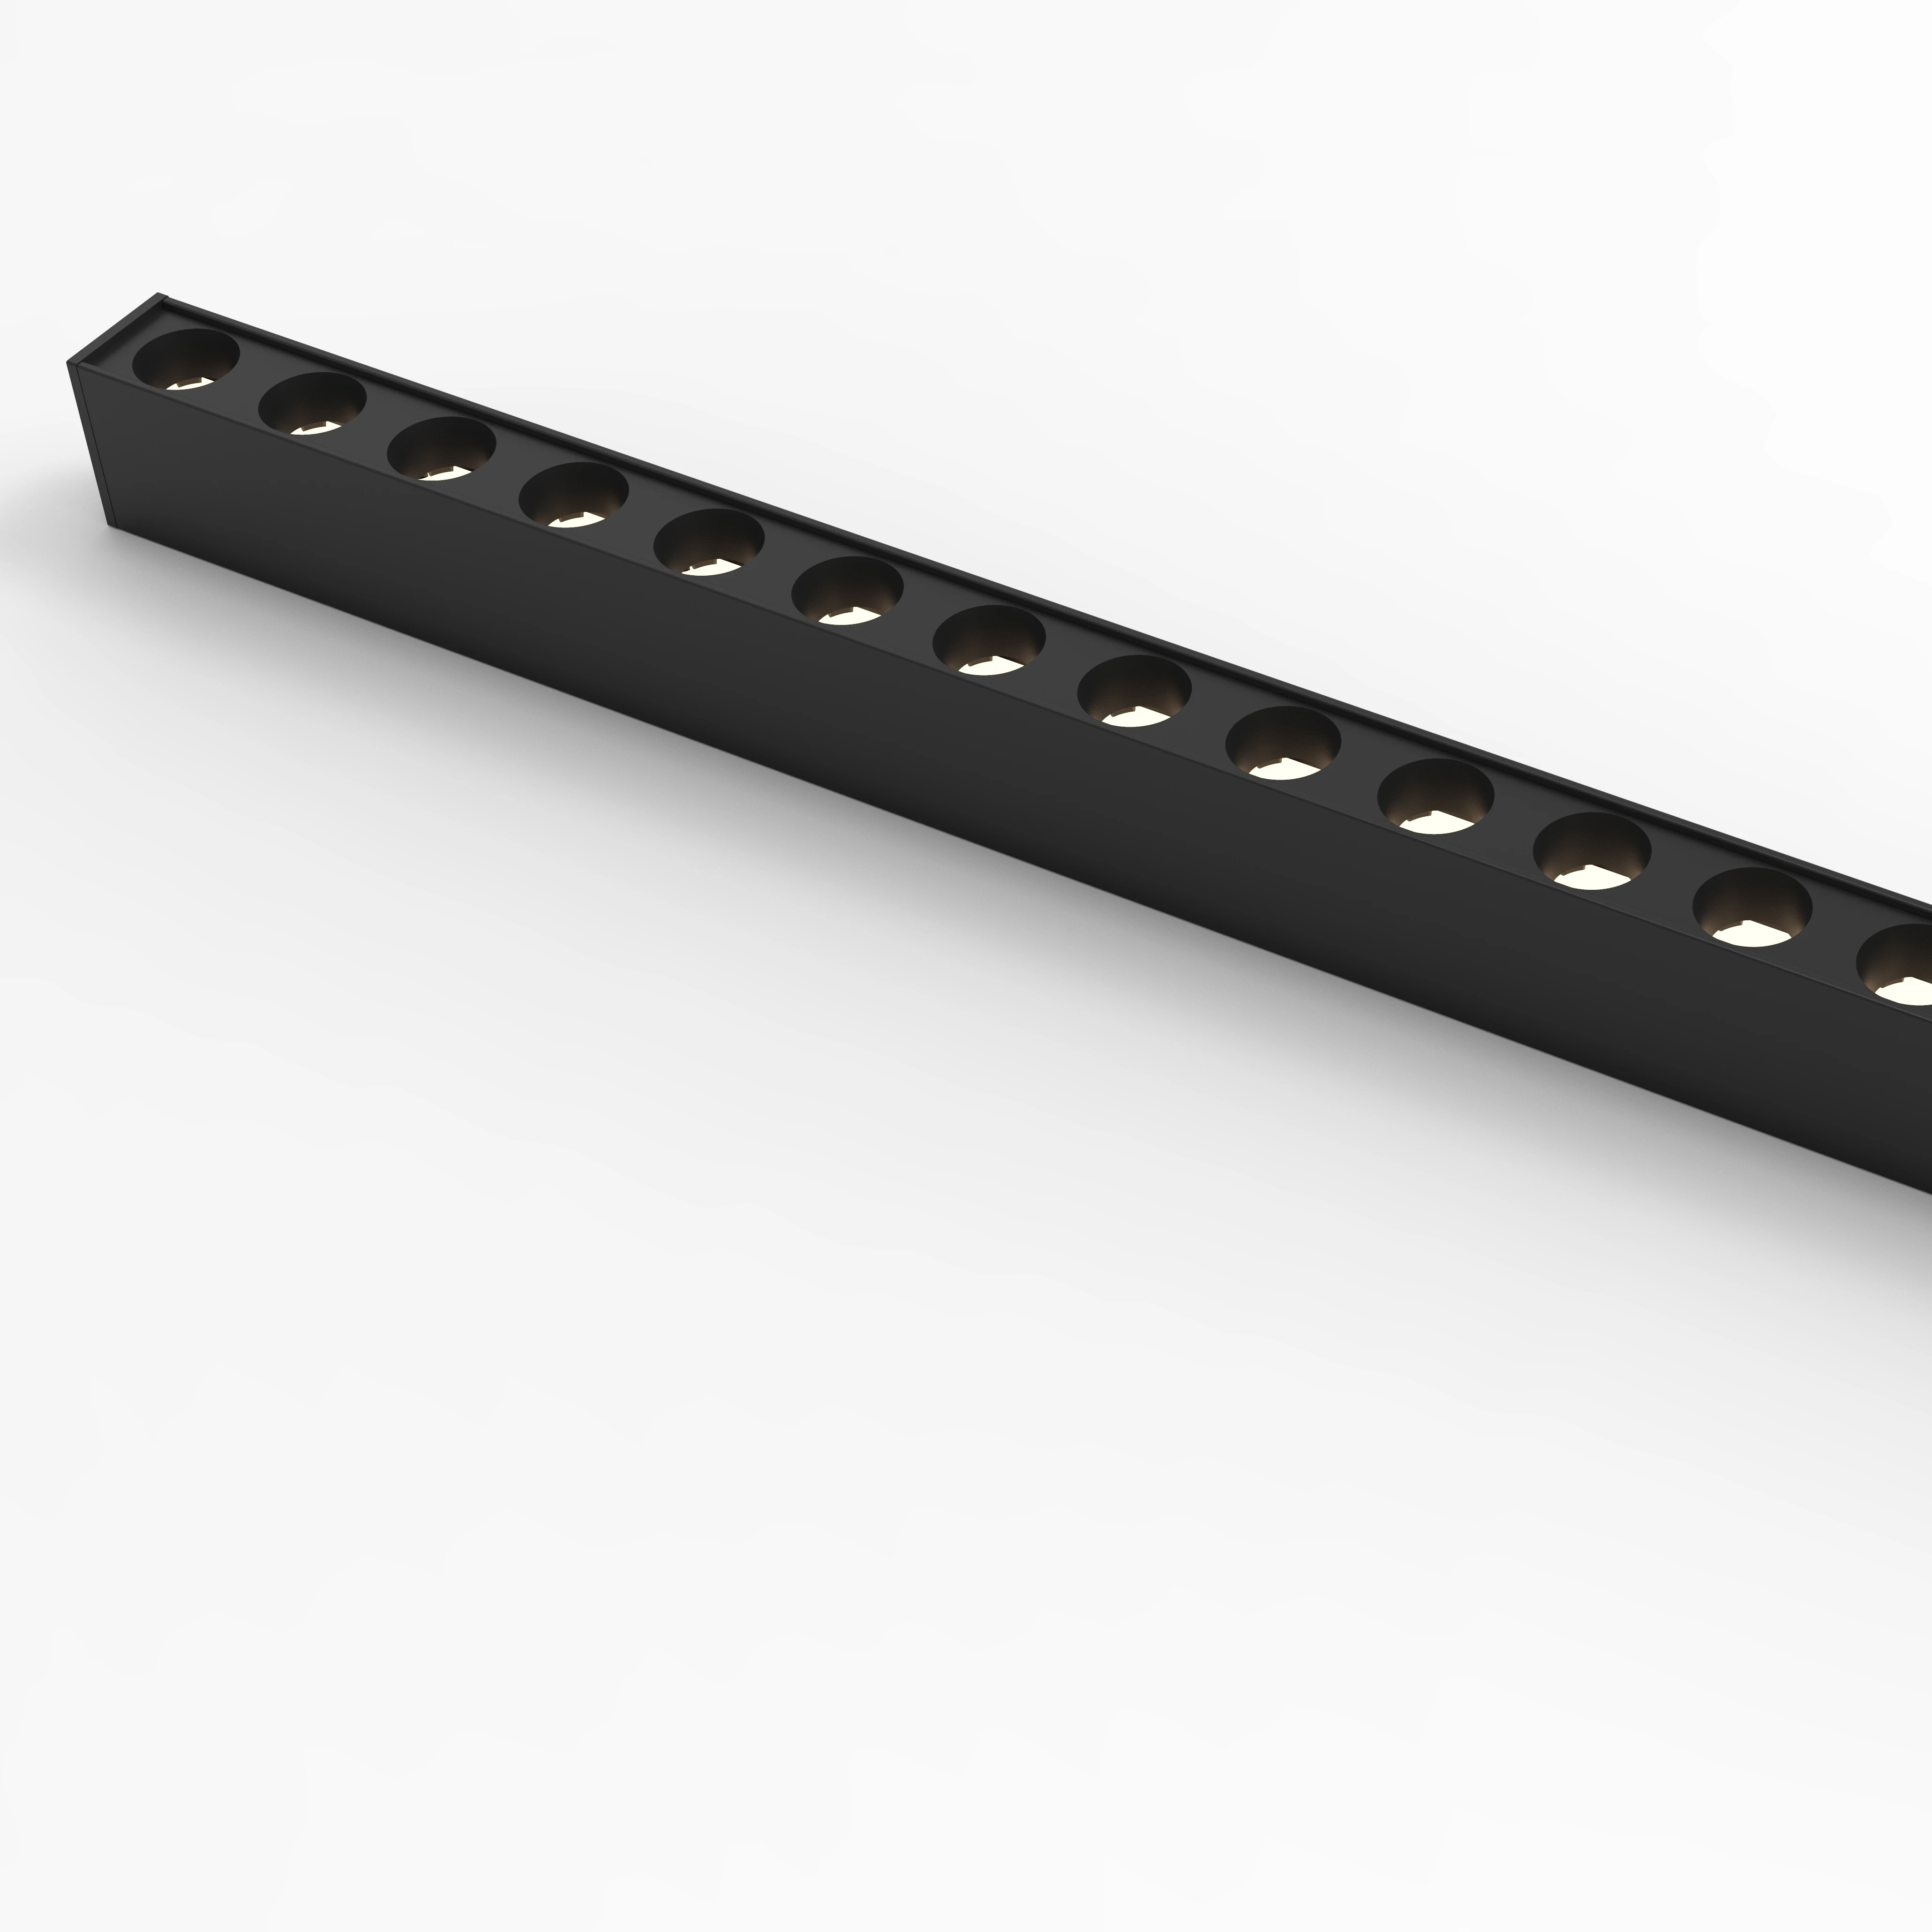 New hot sale black aluminum anodized profile  led linear light with optic lens for led light strip   MO1421